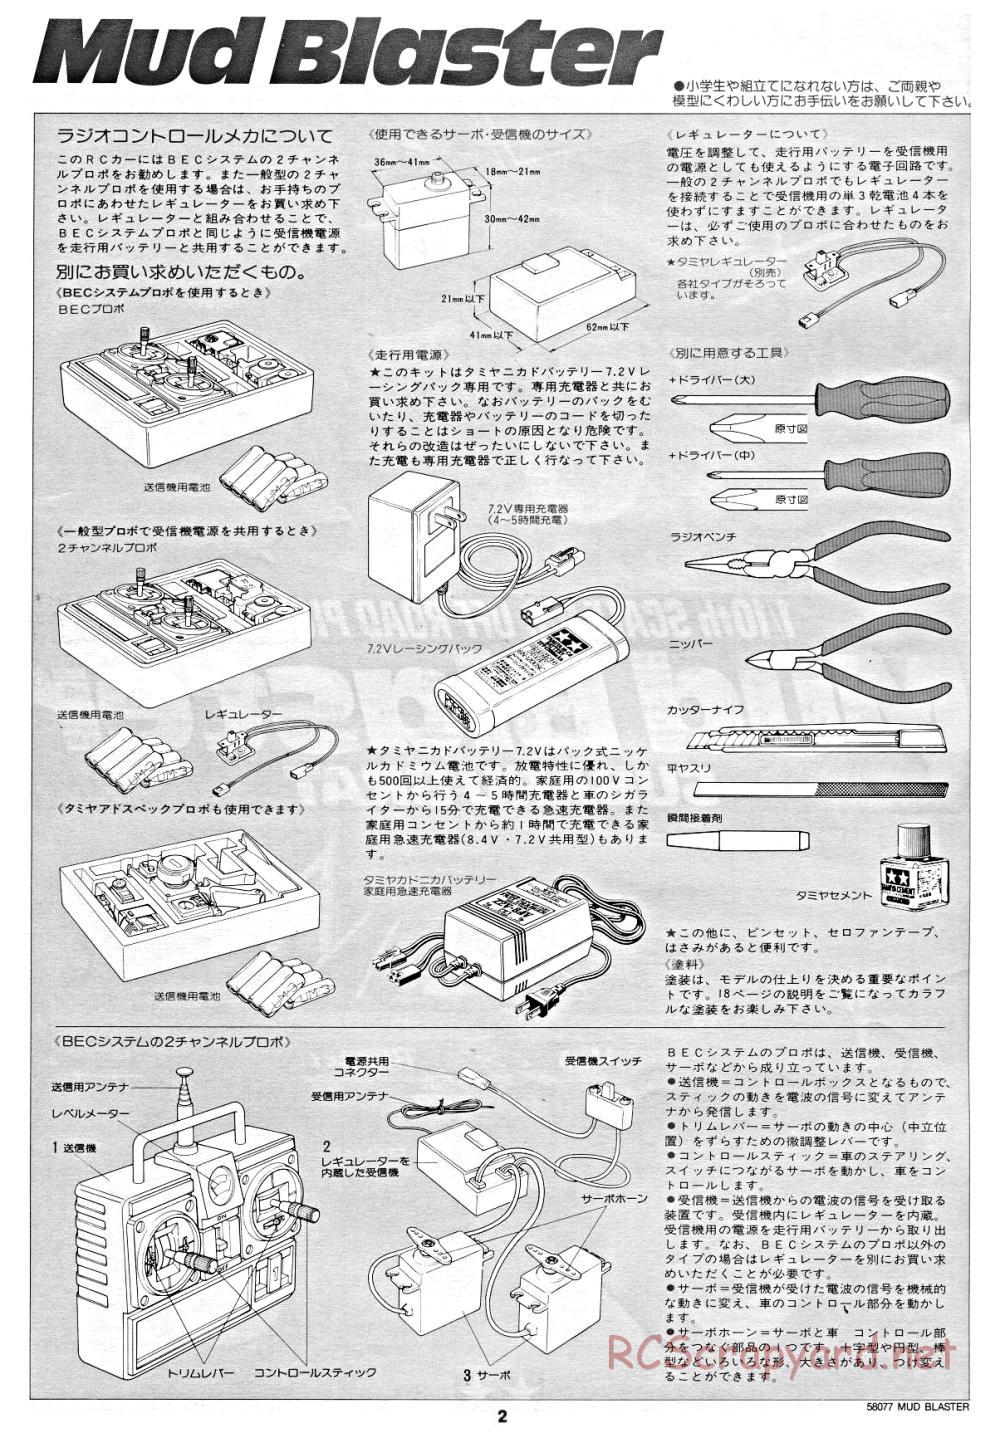 Tamiya - Mud Blaster - 58077 - Manual - Page 2